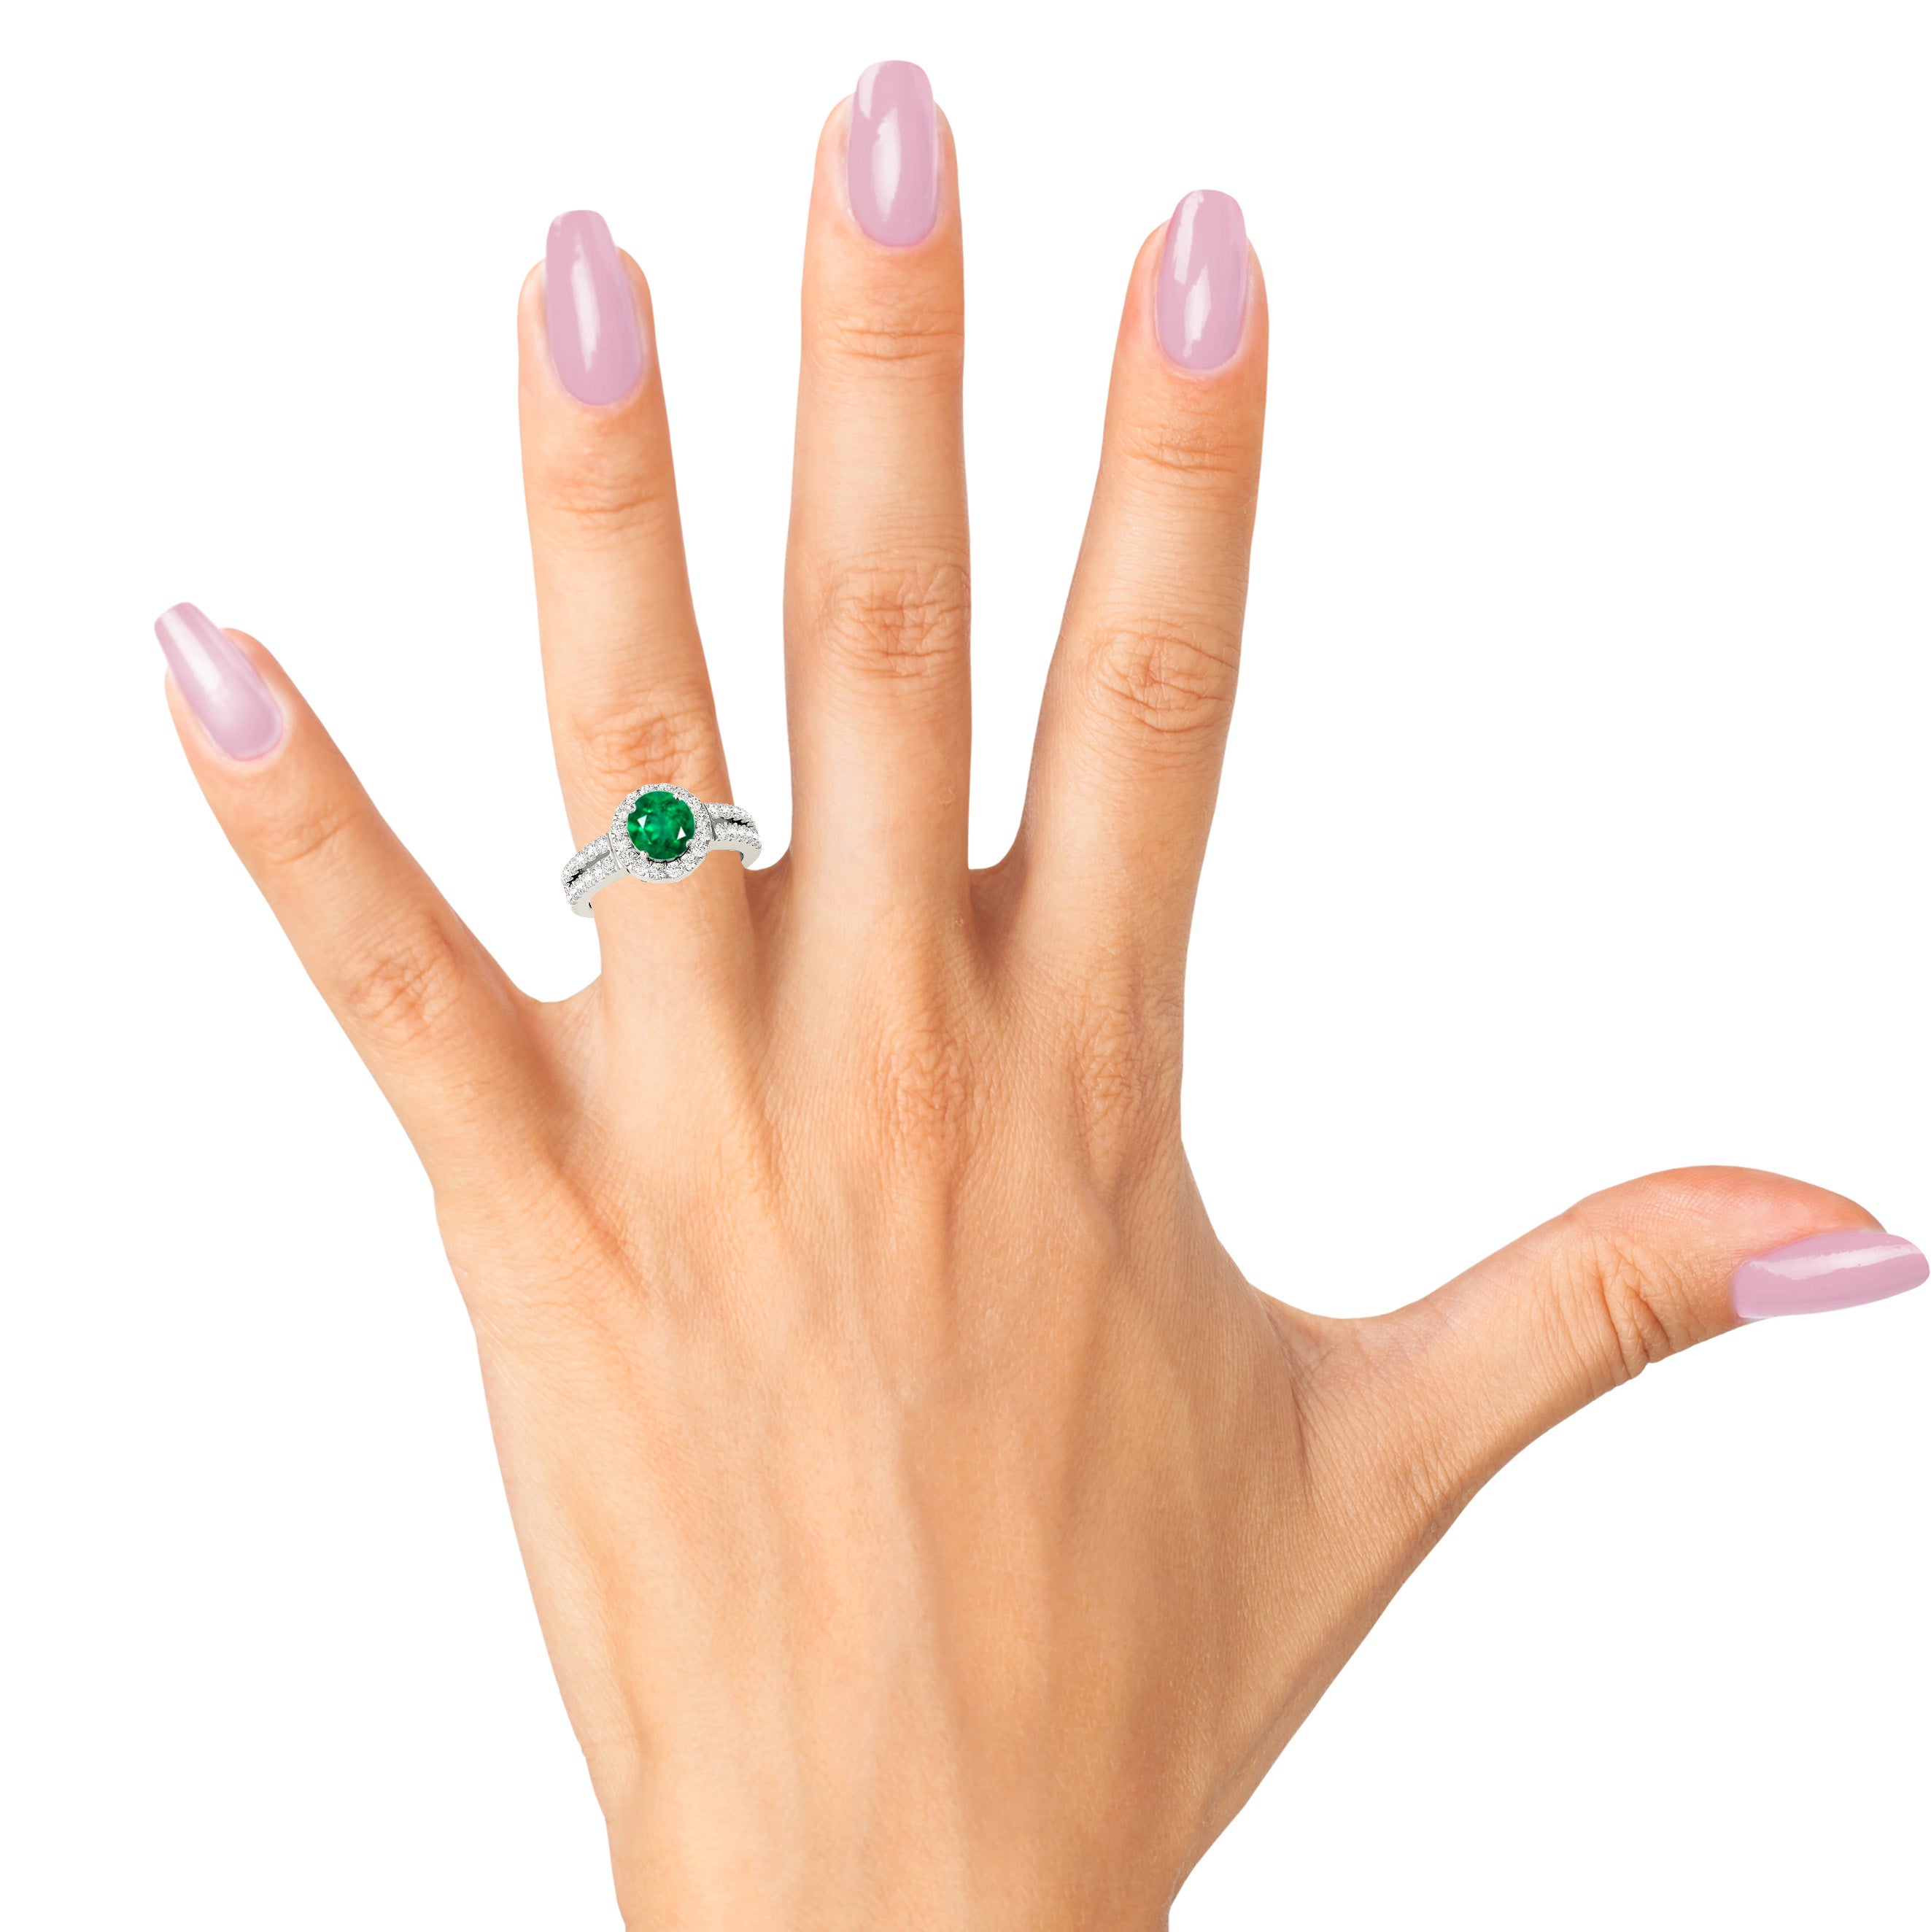 1.14 ct. Genuine Emerald Ring With 0.40 ctw. Diamond Halo , Split Diamond Shank-in 14K/18K White, Yellow, Rose Gold and Platinum - Christmas Jewelry Gift -VIRABYANI